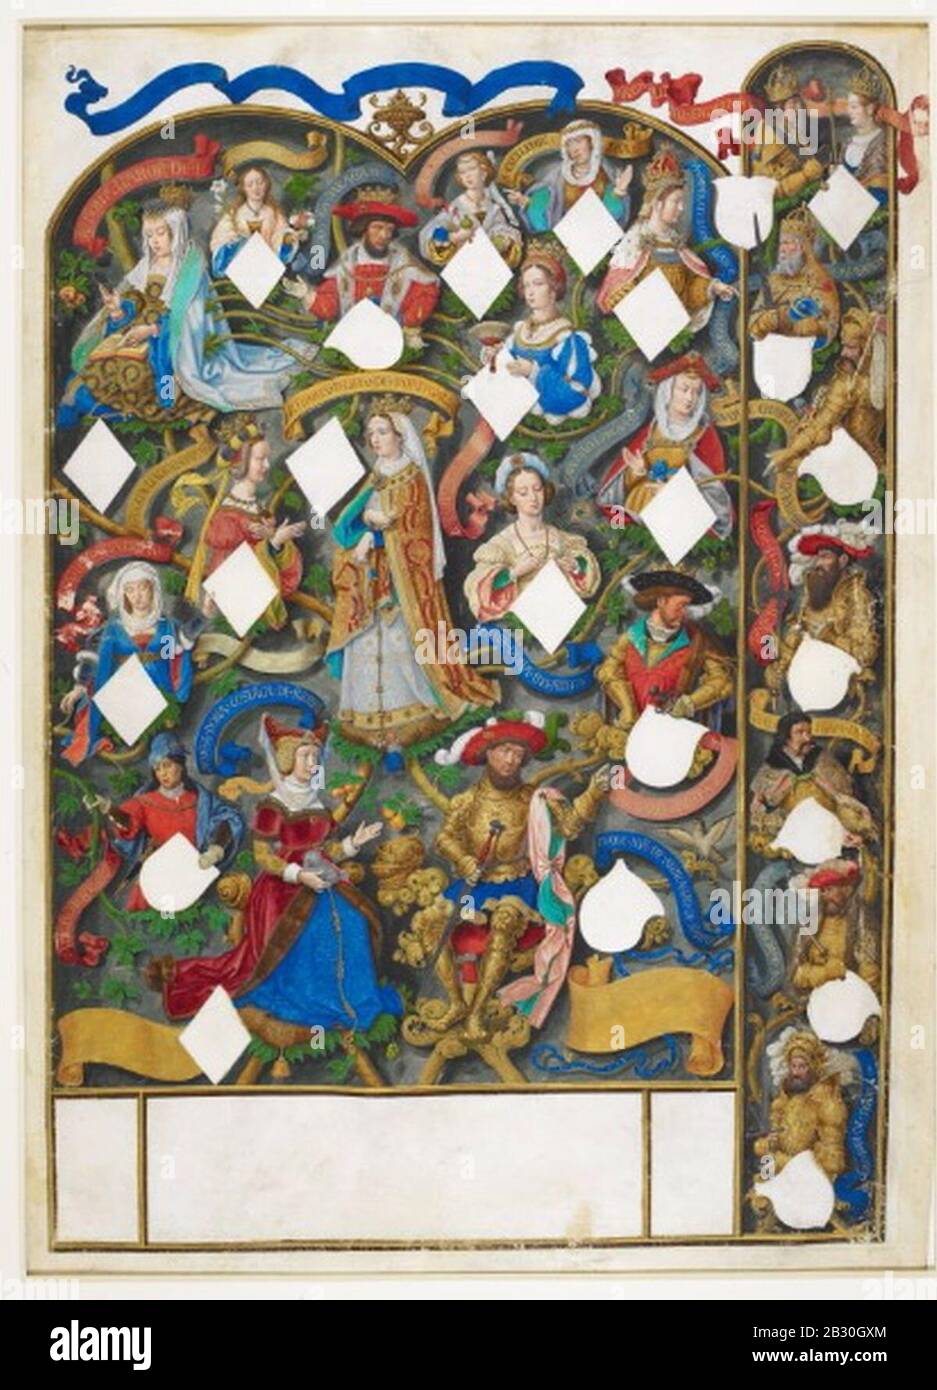 Genealogia dos Reis de Portugal (BL Add MS 1253) - f.10r. Stock Photo